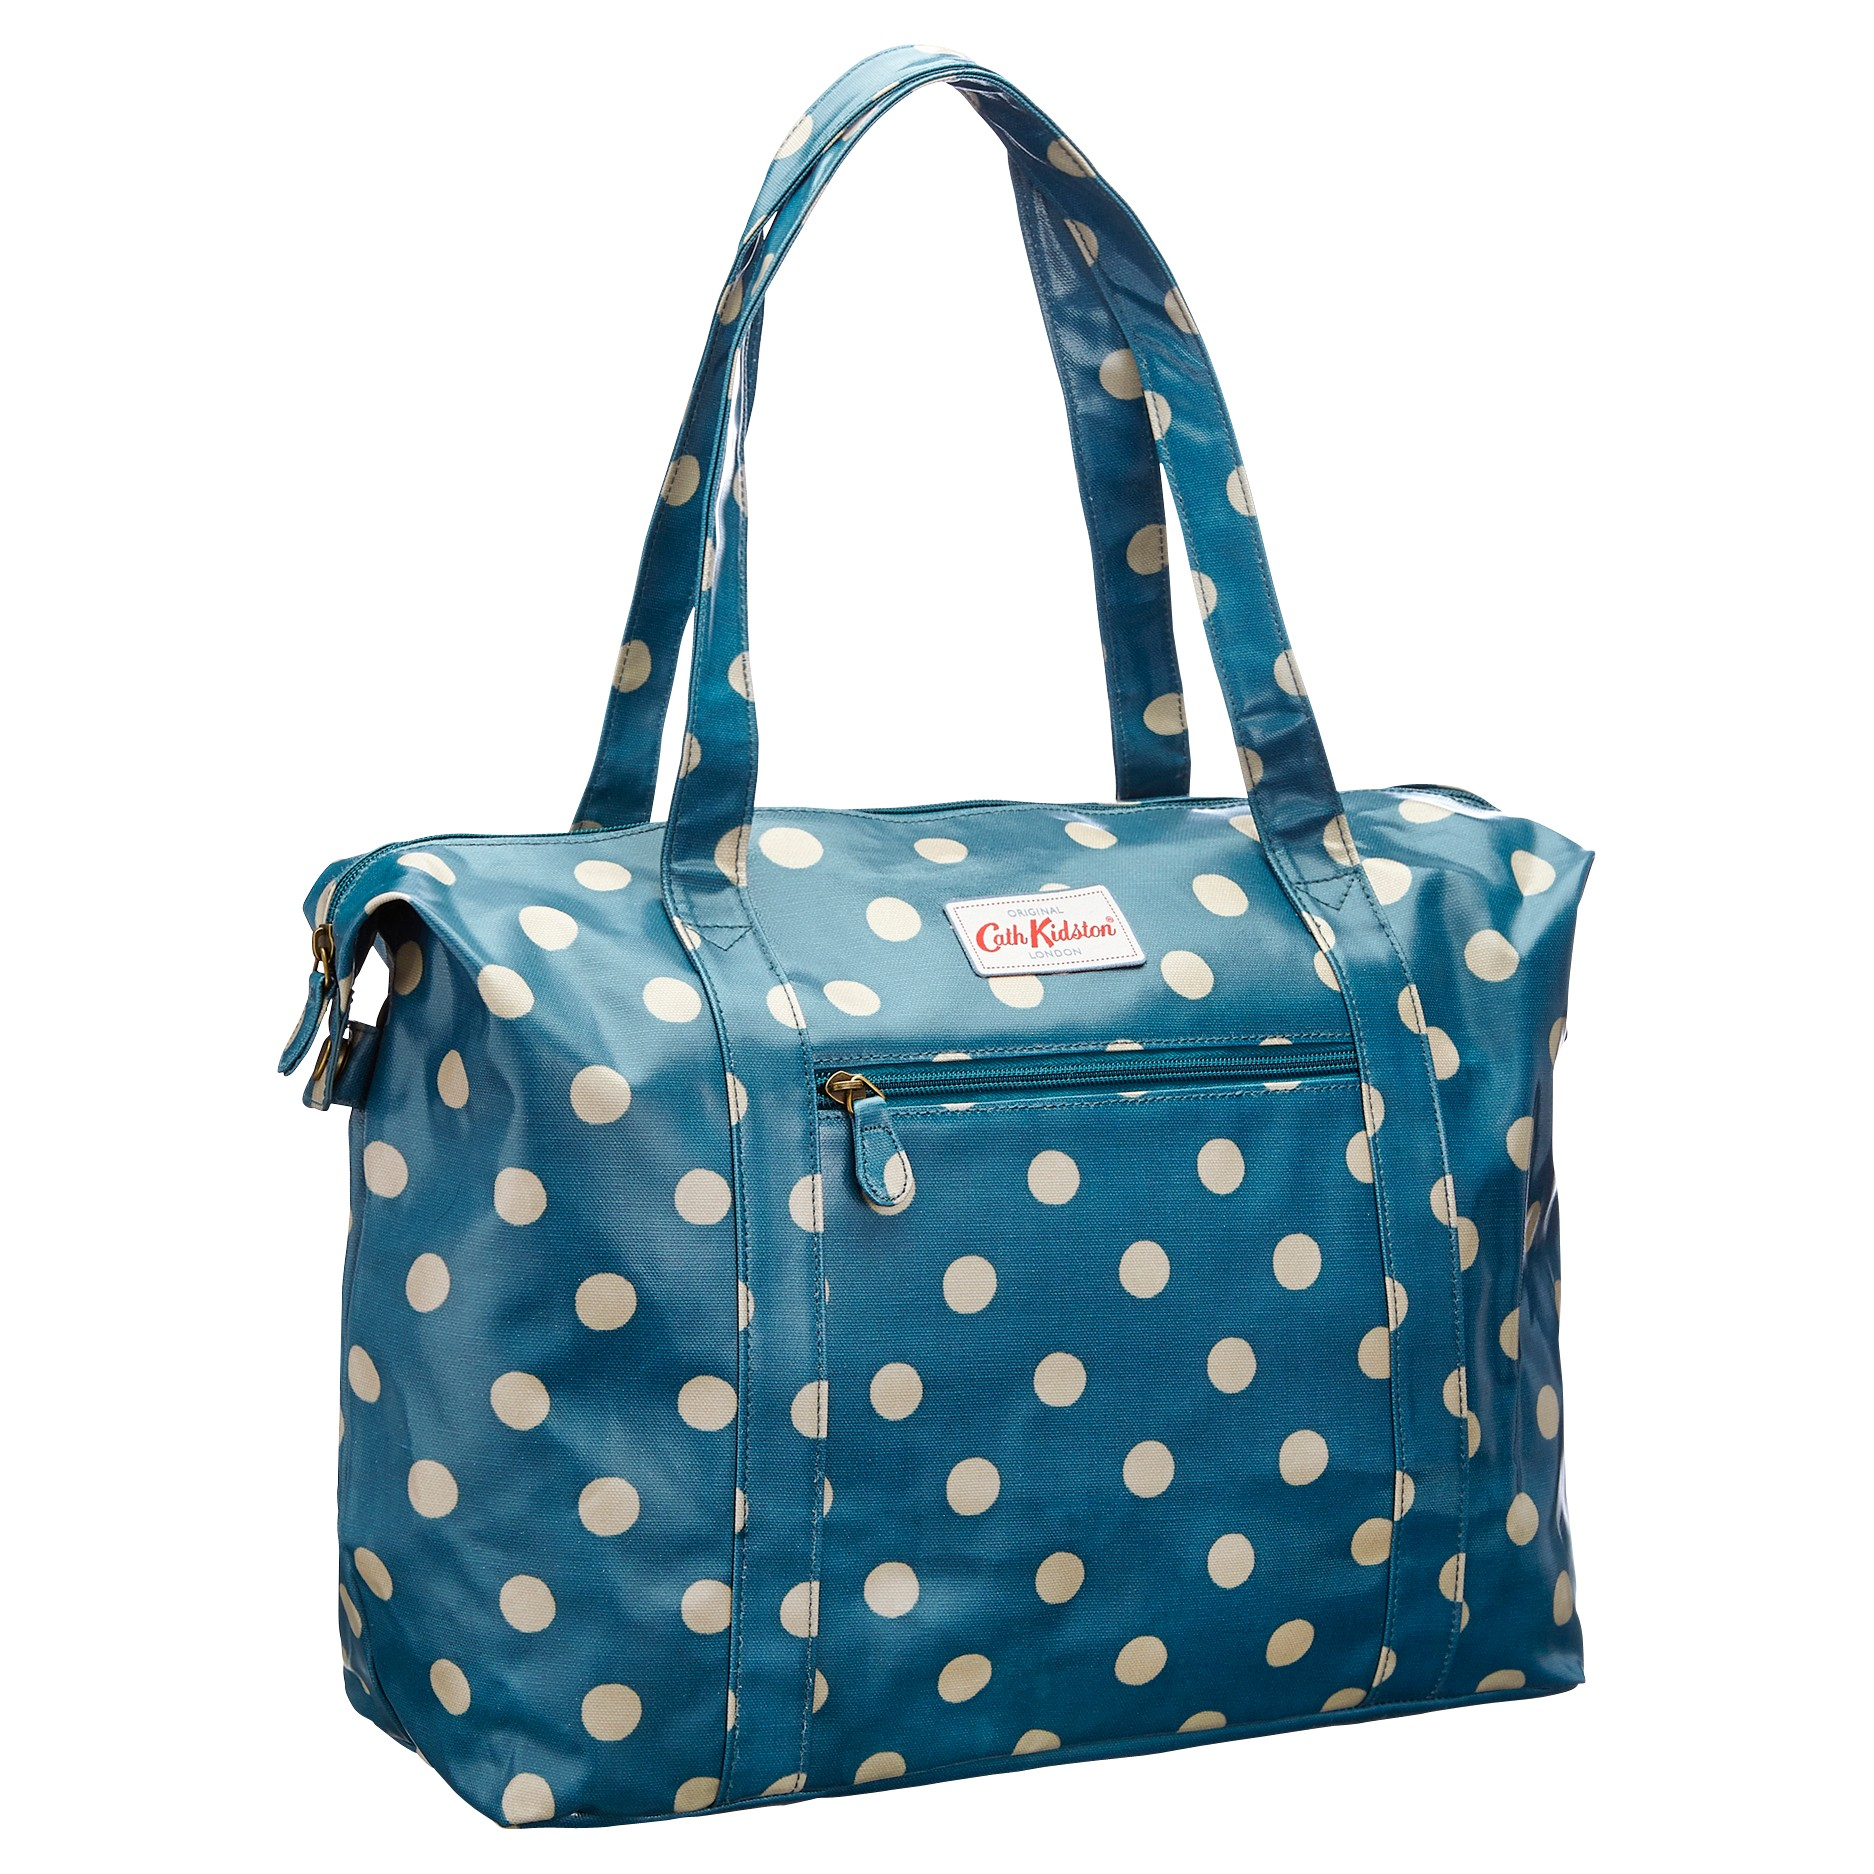 Cath Kidston Button Spot Shoulder Bag in Blue | Lyst